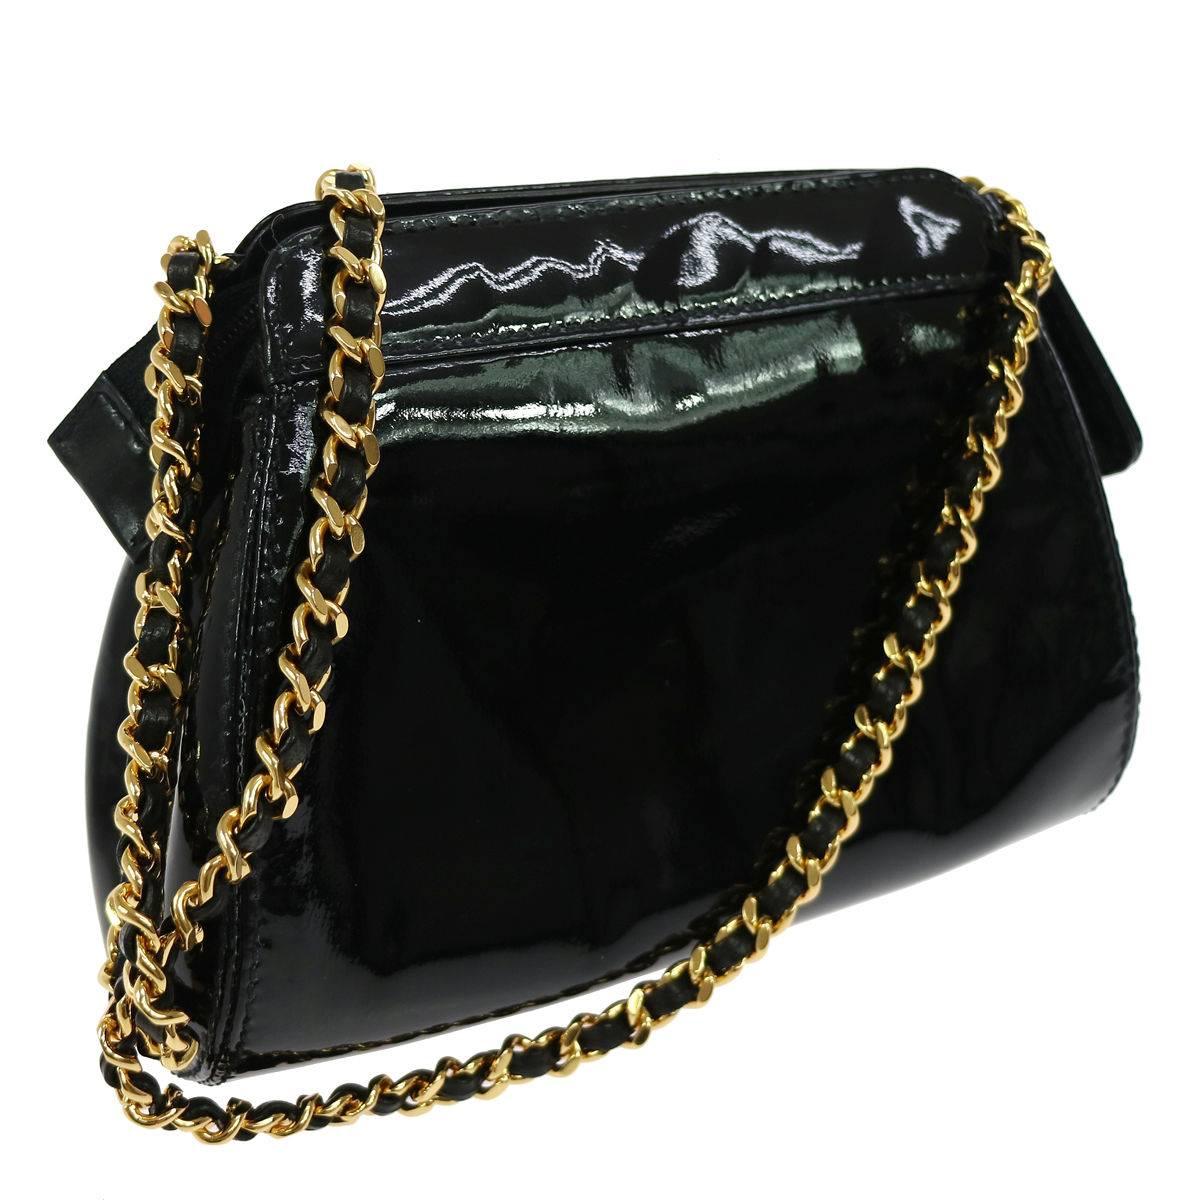 Women's Chanel Black Patent Leather Party Crossbody Shoulder Bag W/Box